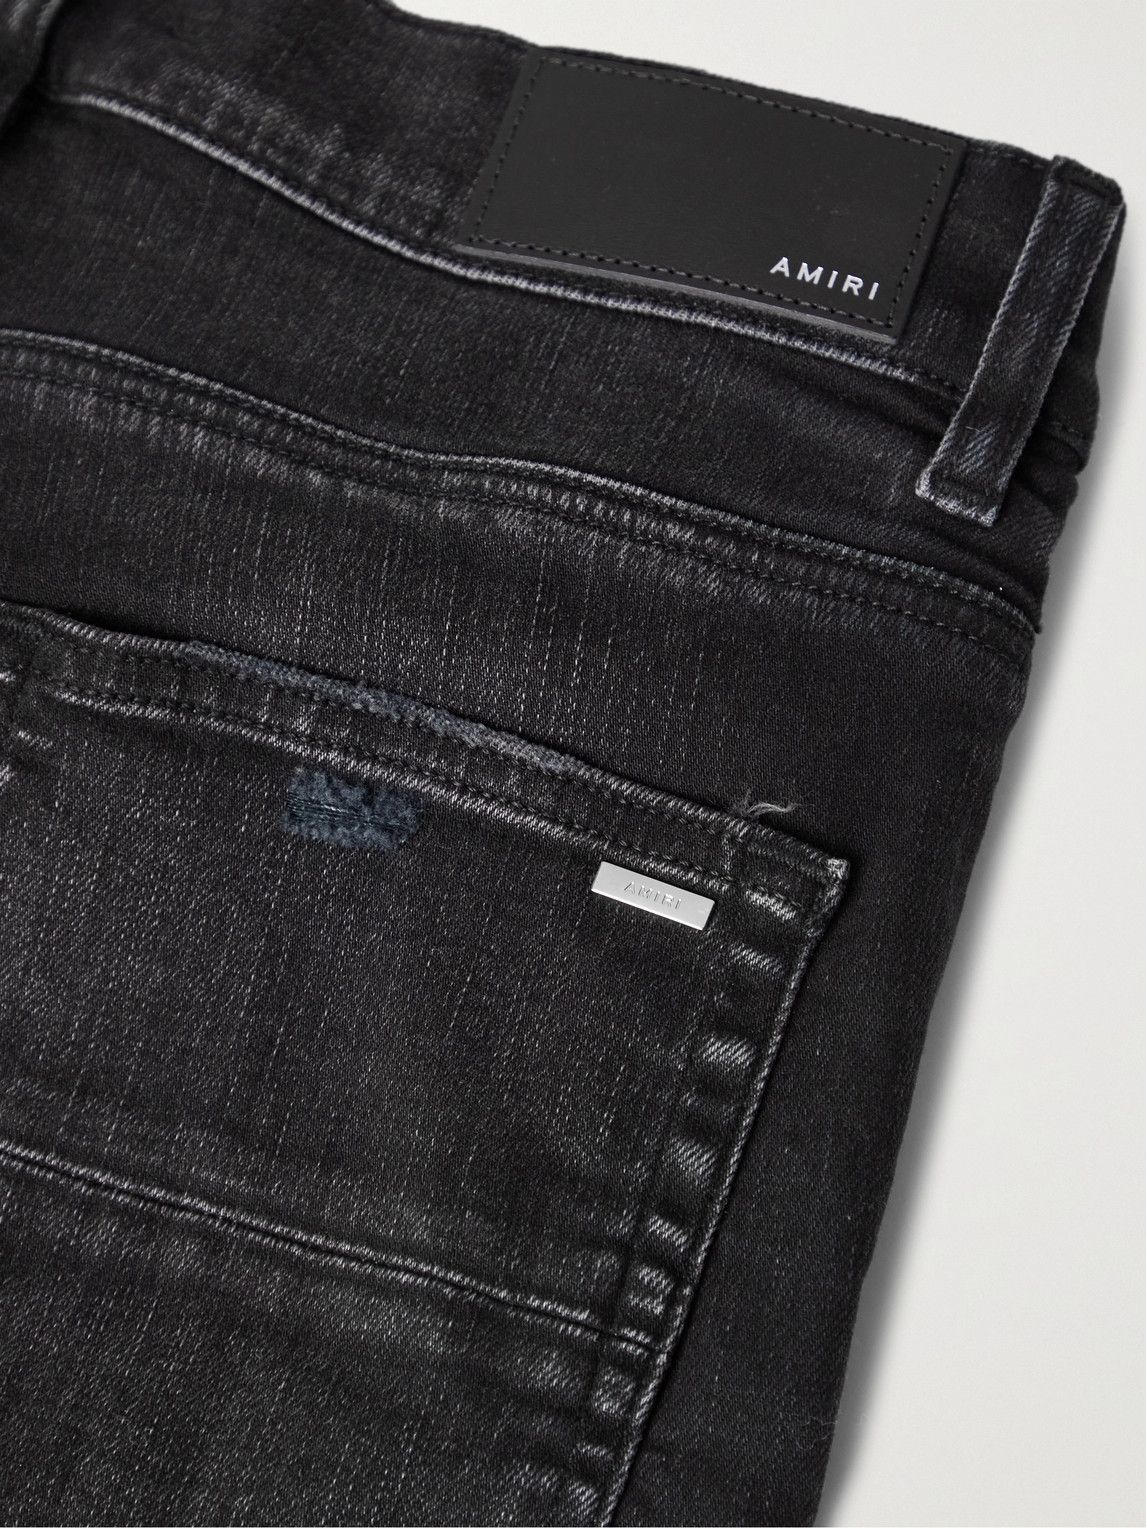 AMIRI - Skinny-Fit Logo-Embroidered Distressed Jeans - Black Amiri